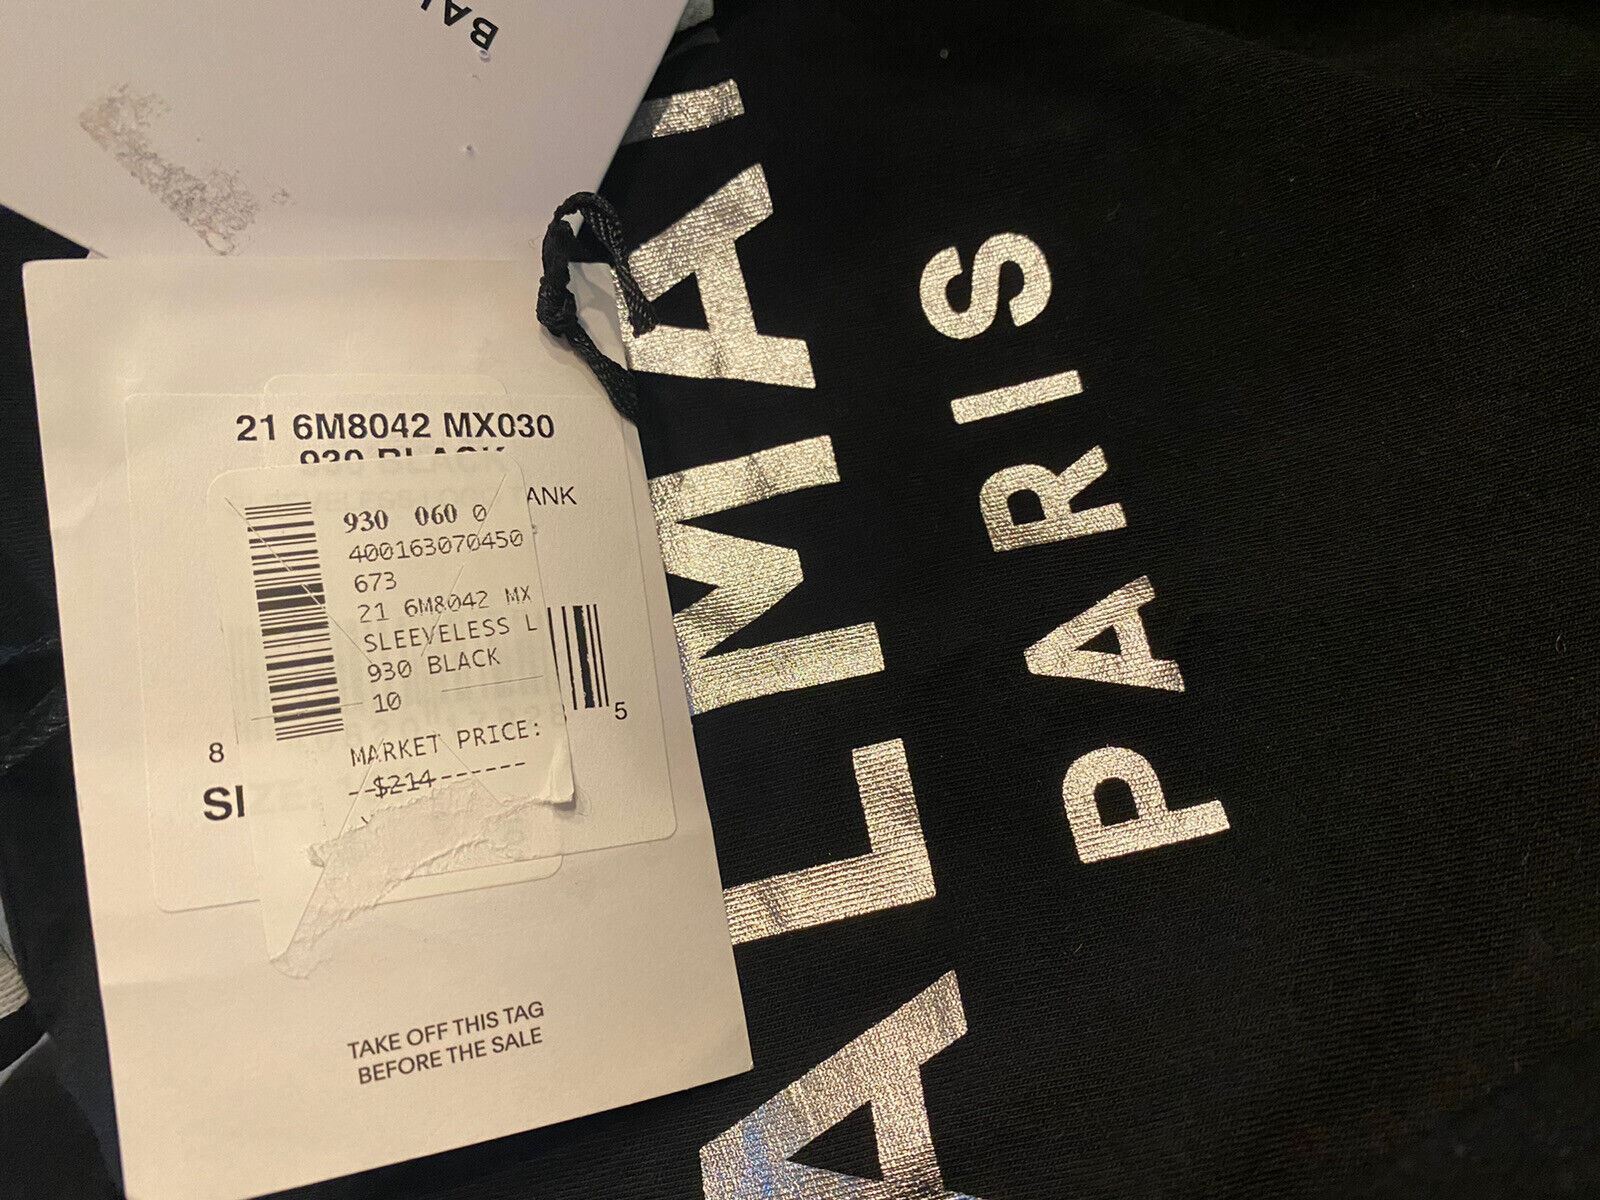 NWT $214 Balmain Girl's Sleeveless Cotton Black T-Shirt Size 10 Made in Portugal